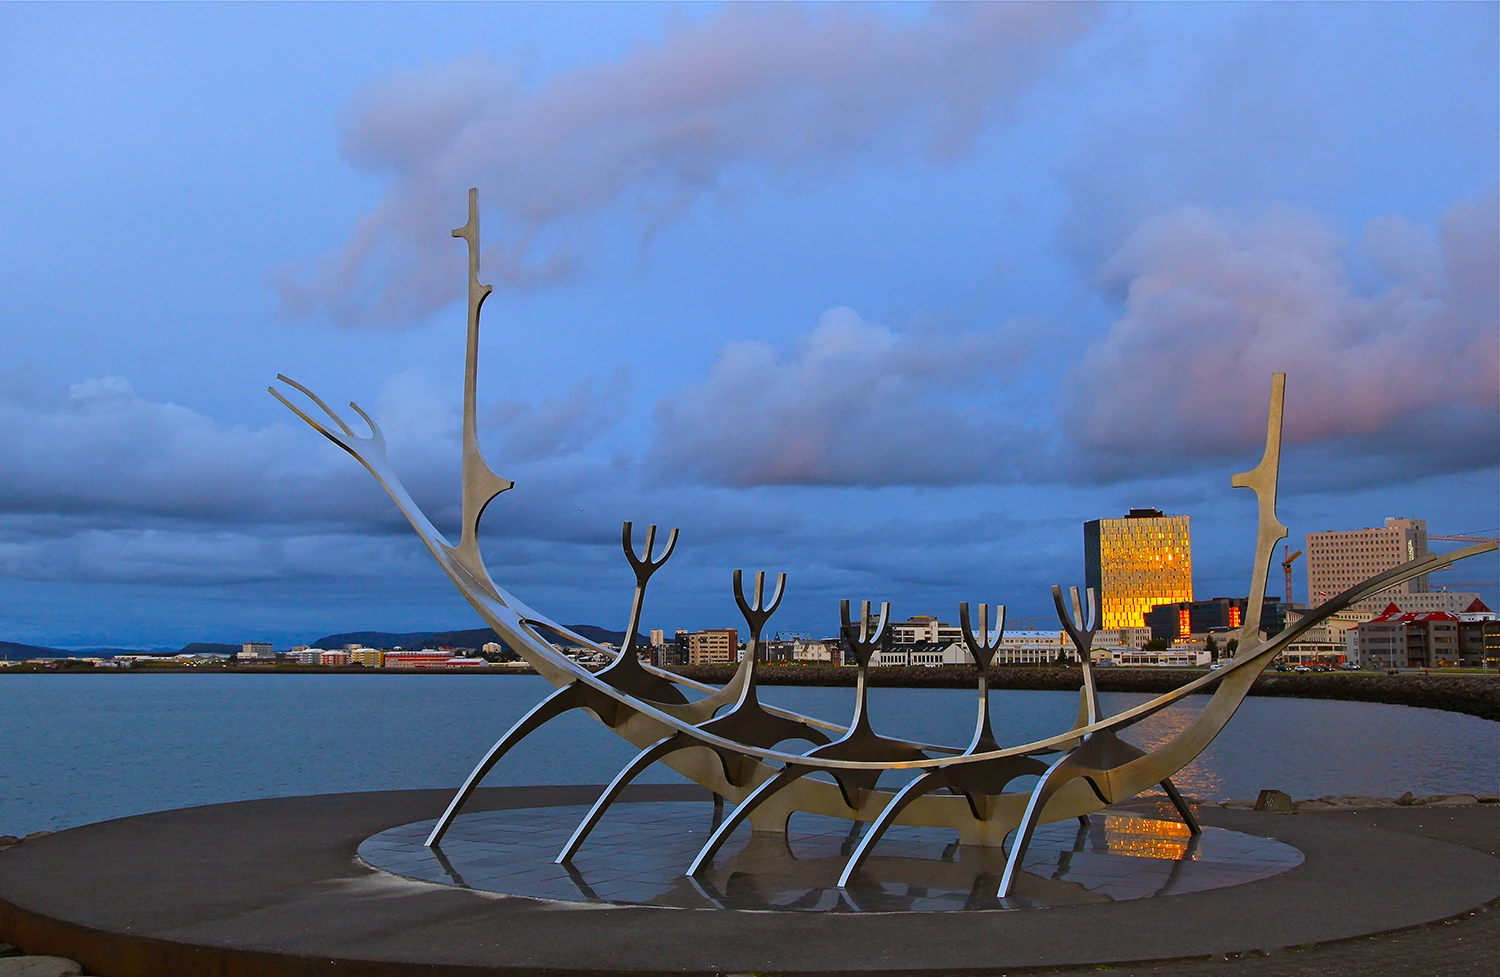 The Reykjavik Sólfar monument